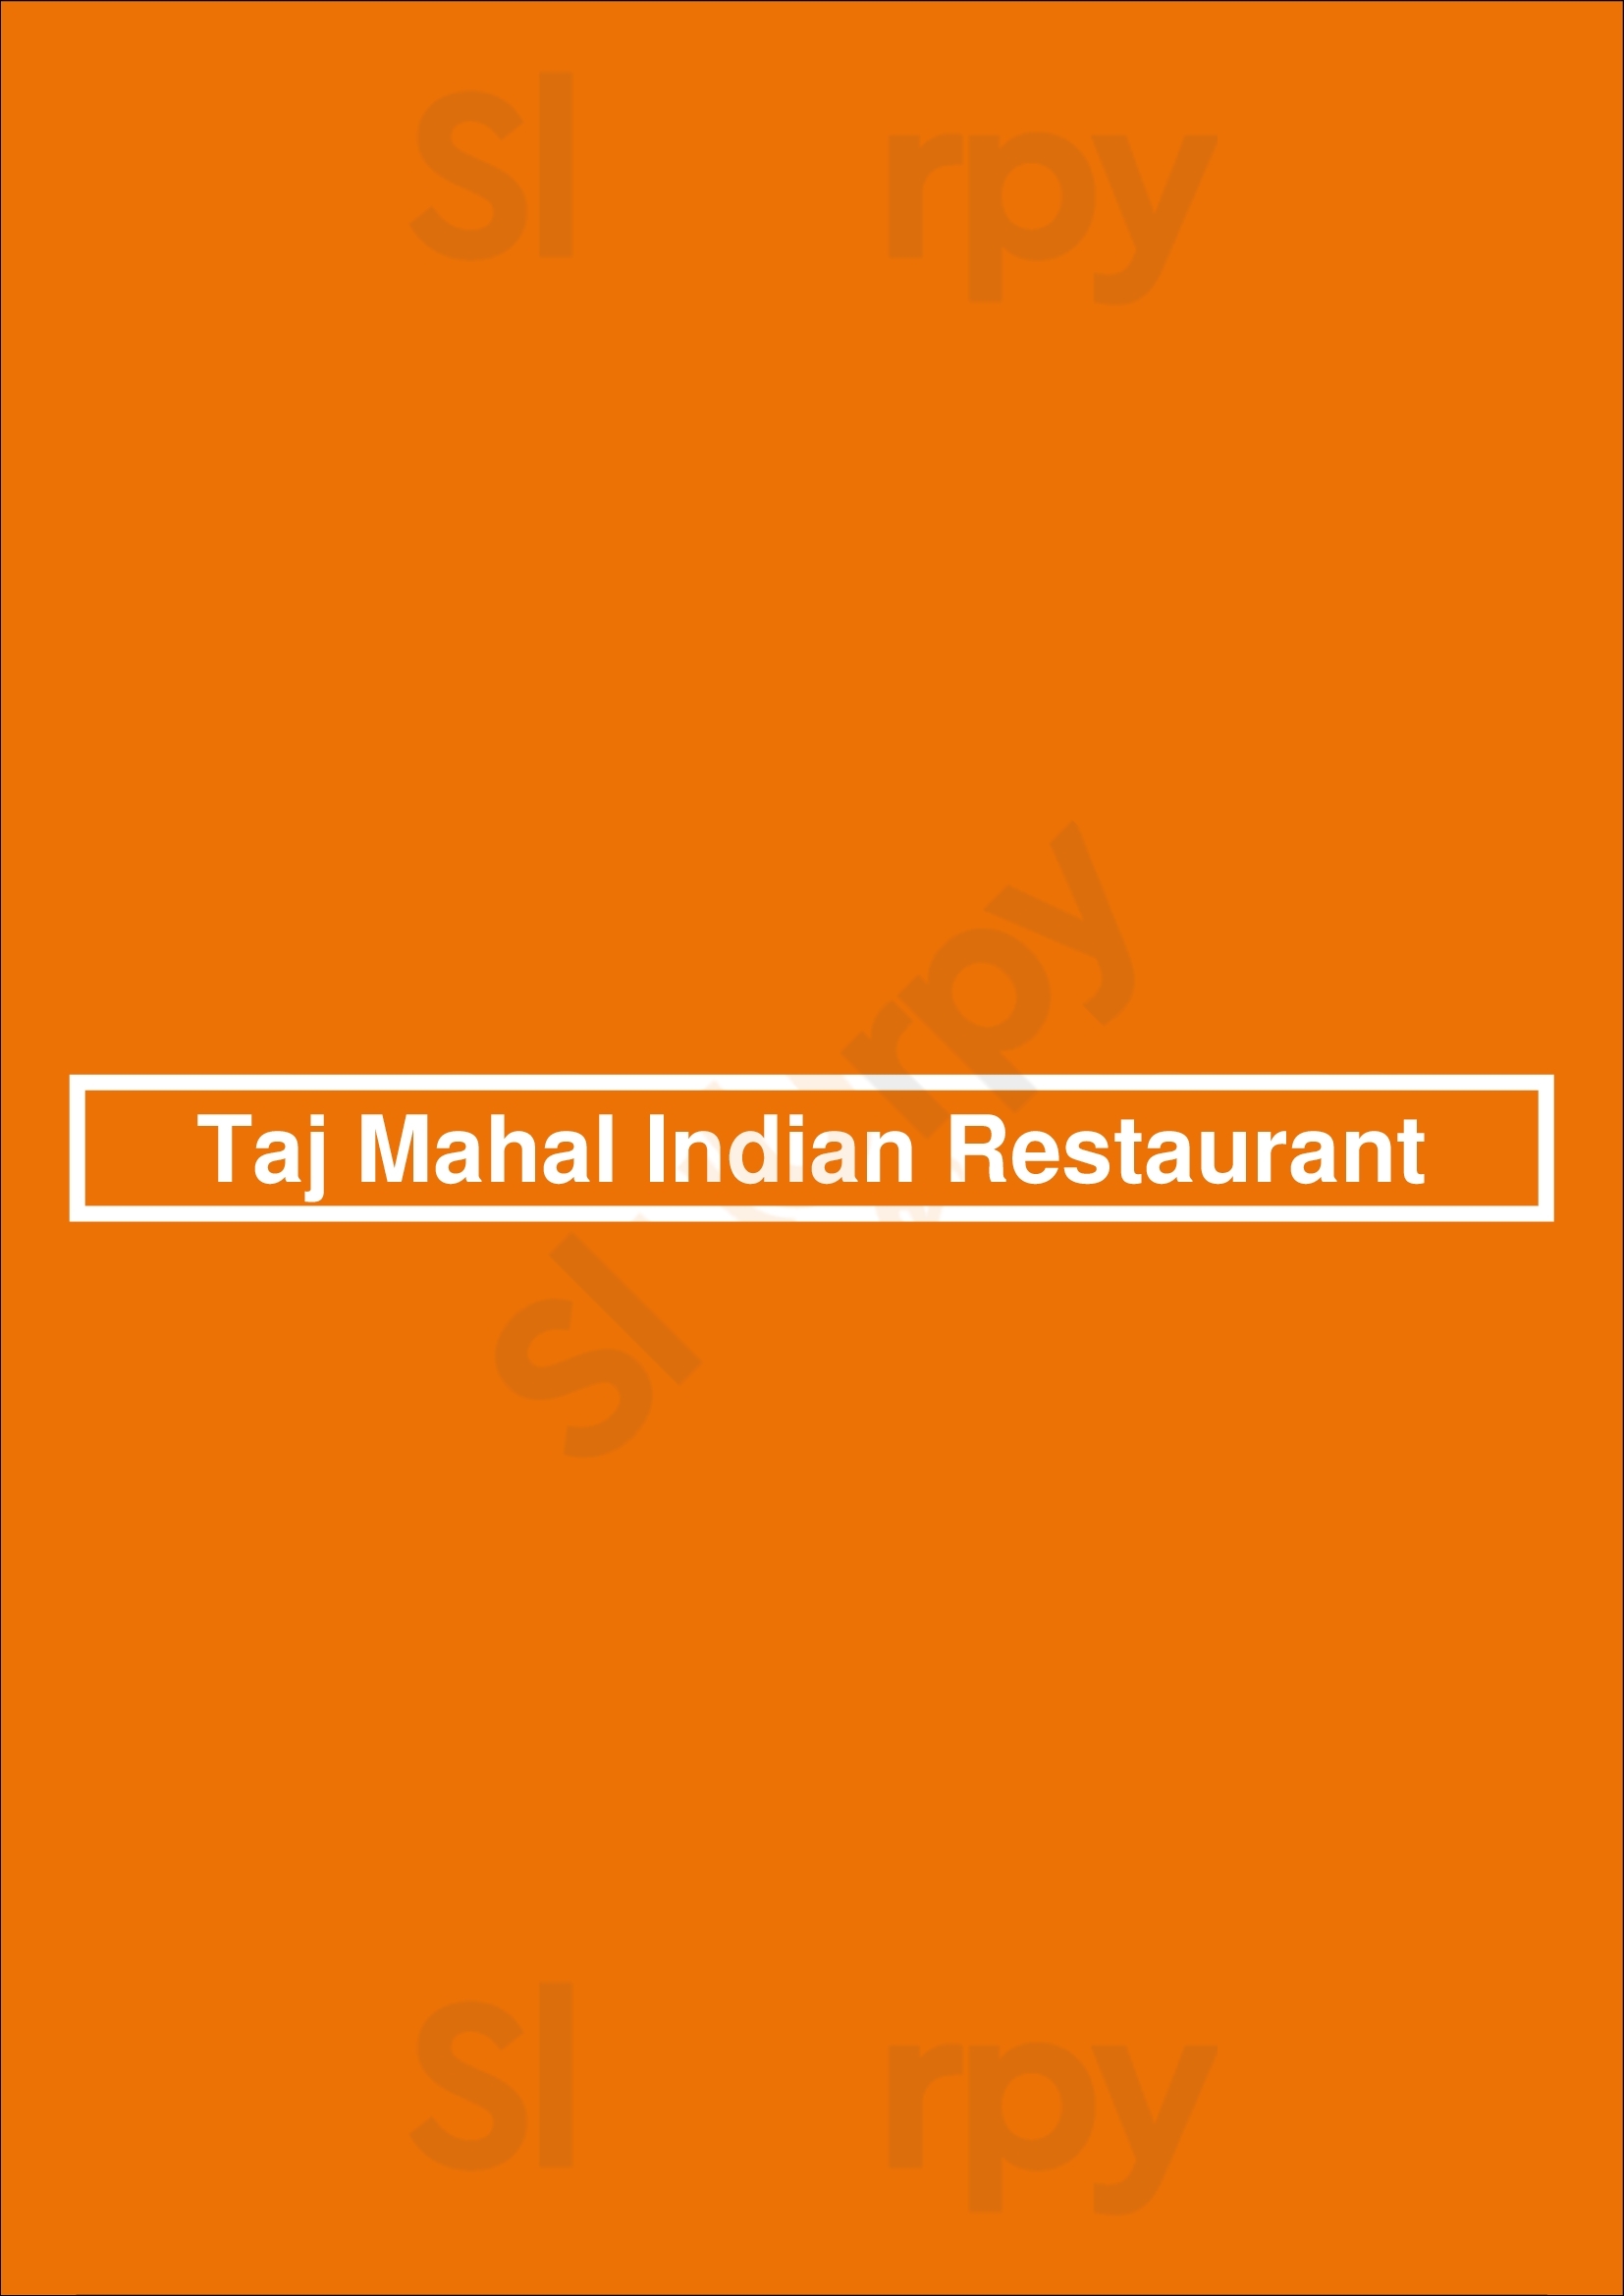 Taj Mahal Indian Restaurant Funchal Menu - 1